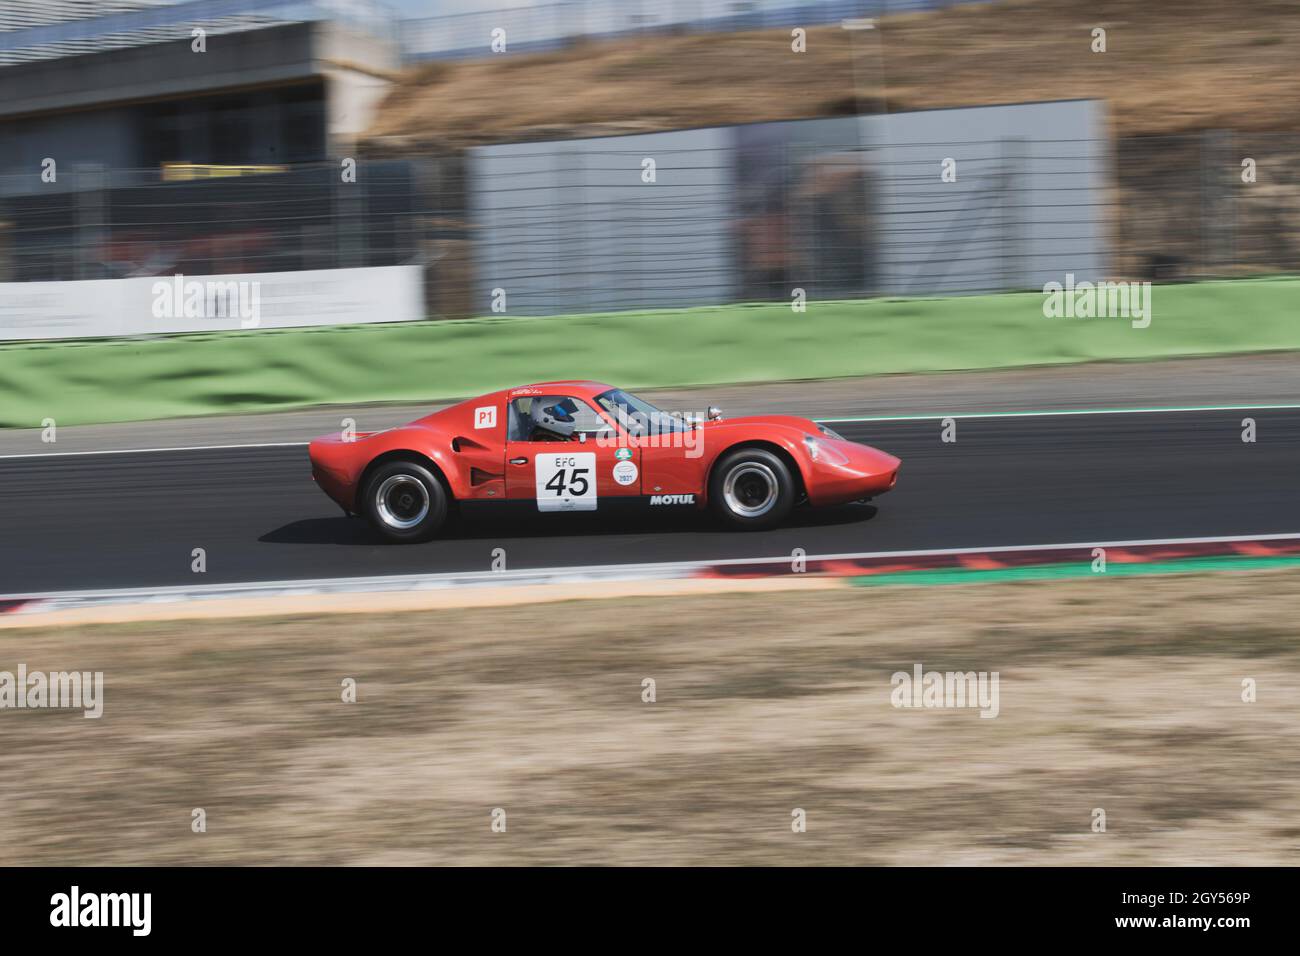 Italy, september 11 2021. Vallelunga classic. 70s vintage race car prototype endurance blurred motion background  Chevron B8 on asphalt racetrack Stock Photo